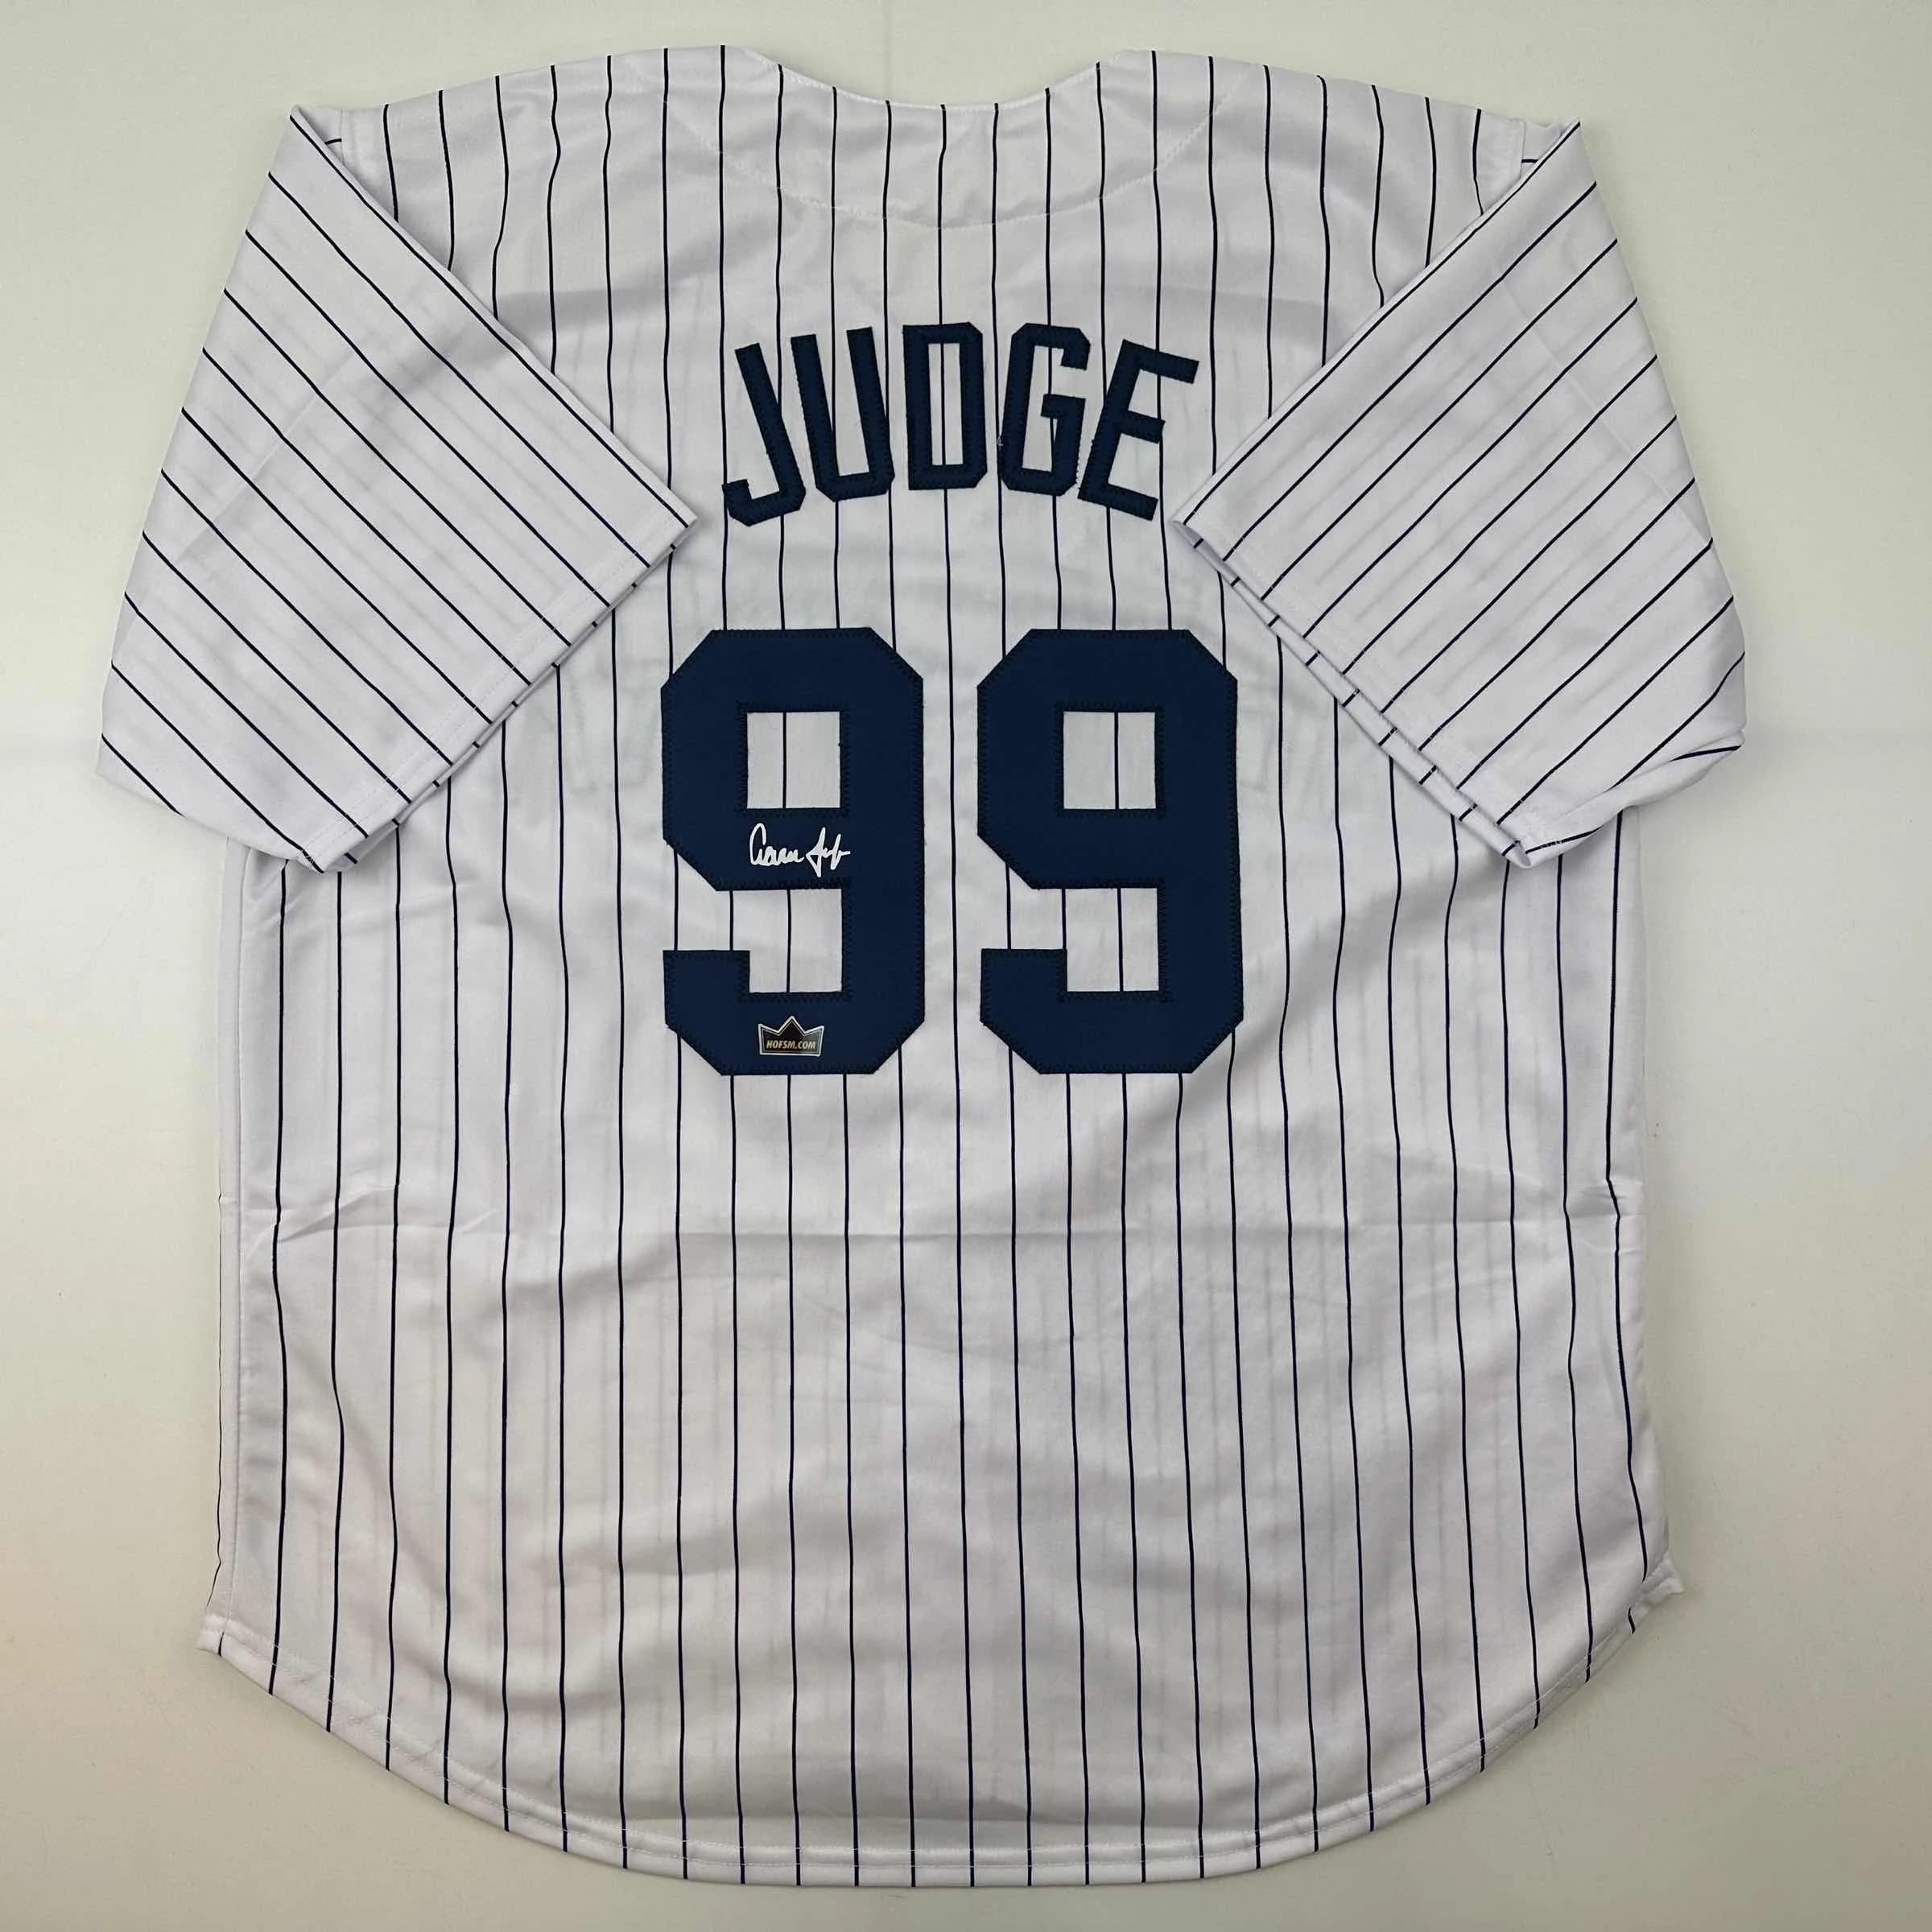 judge baseball jerseys